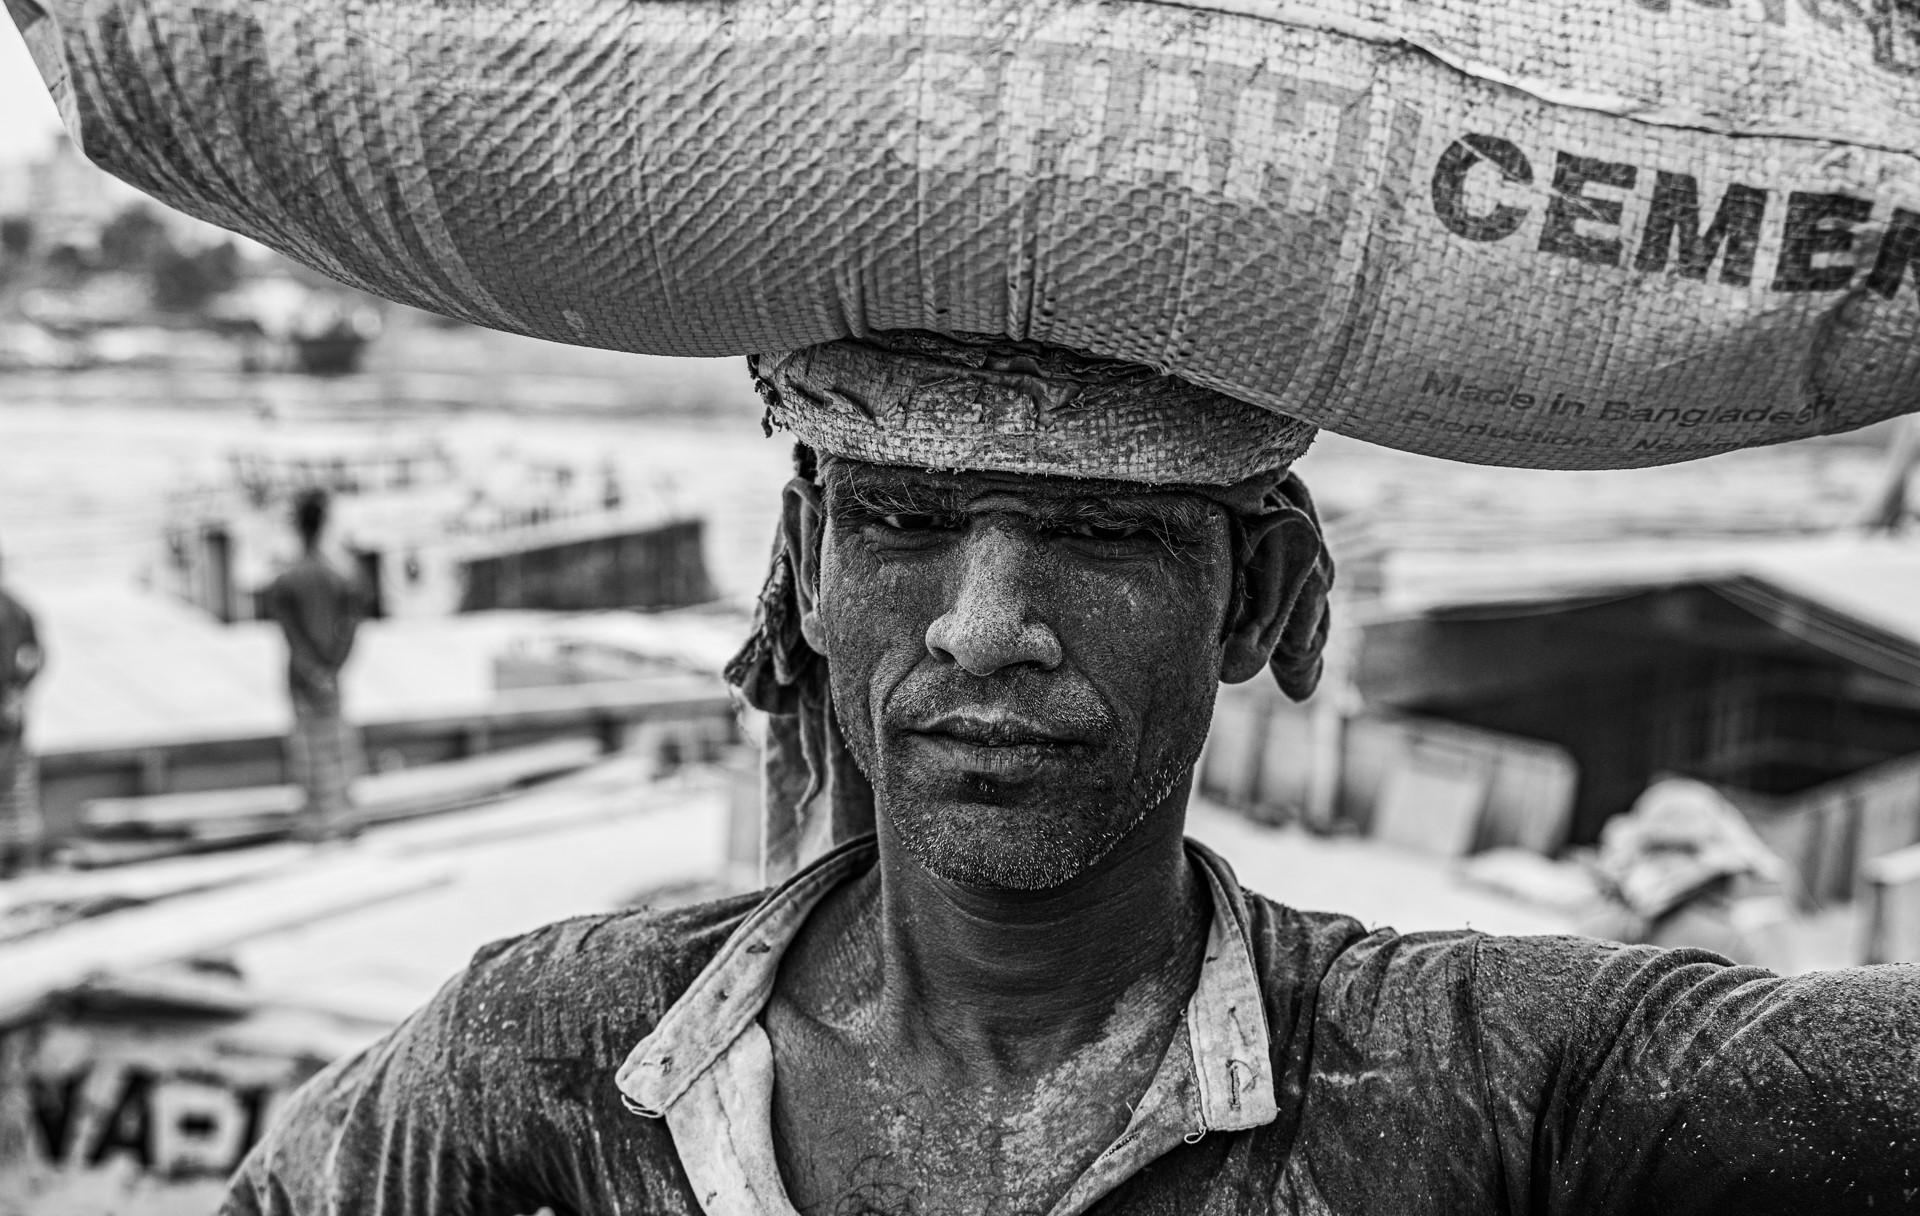 New York Photography Awards Winner - Peoples of Dhaka